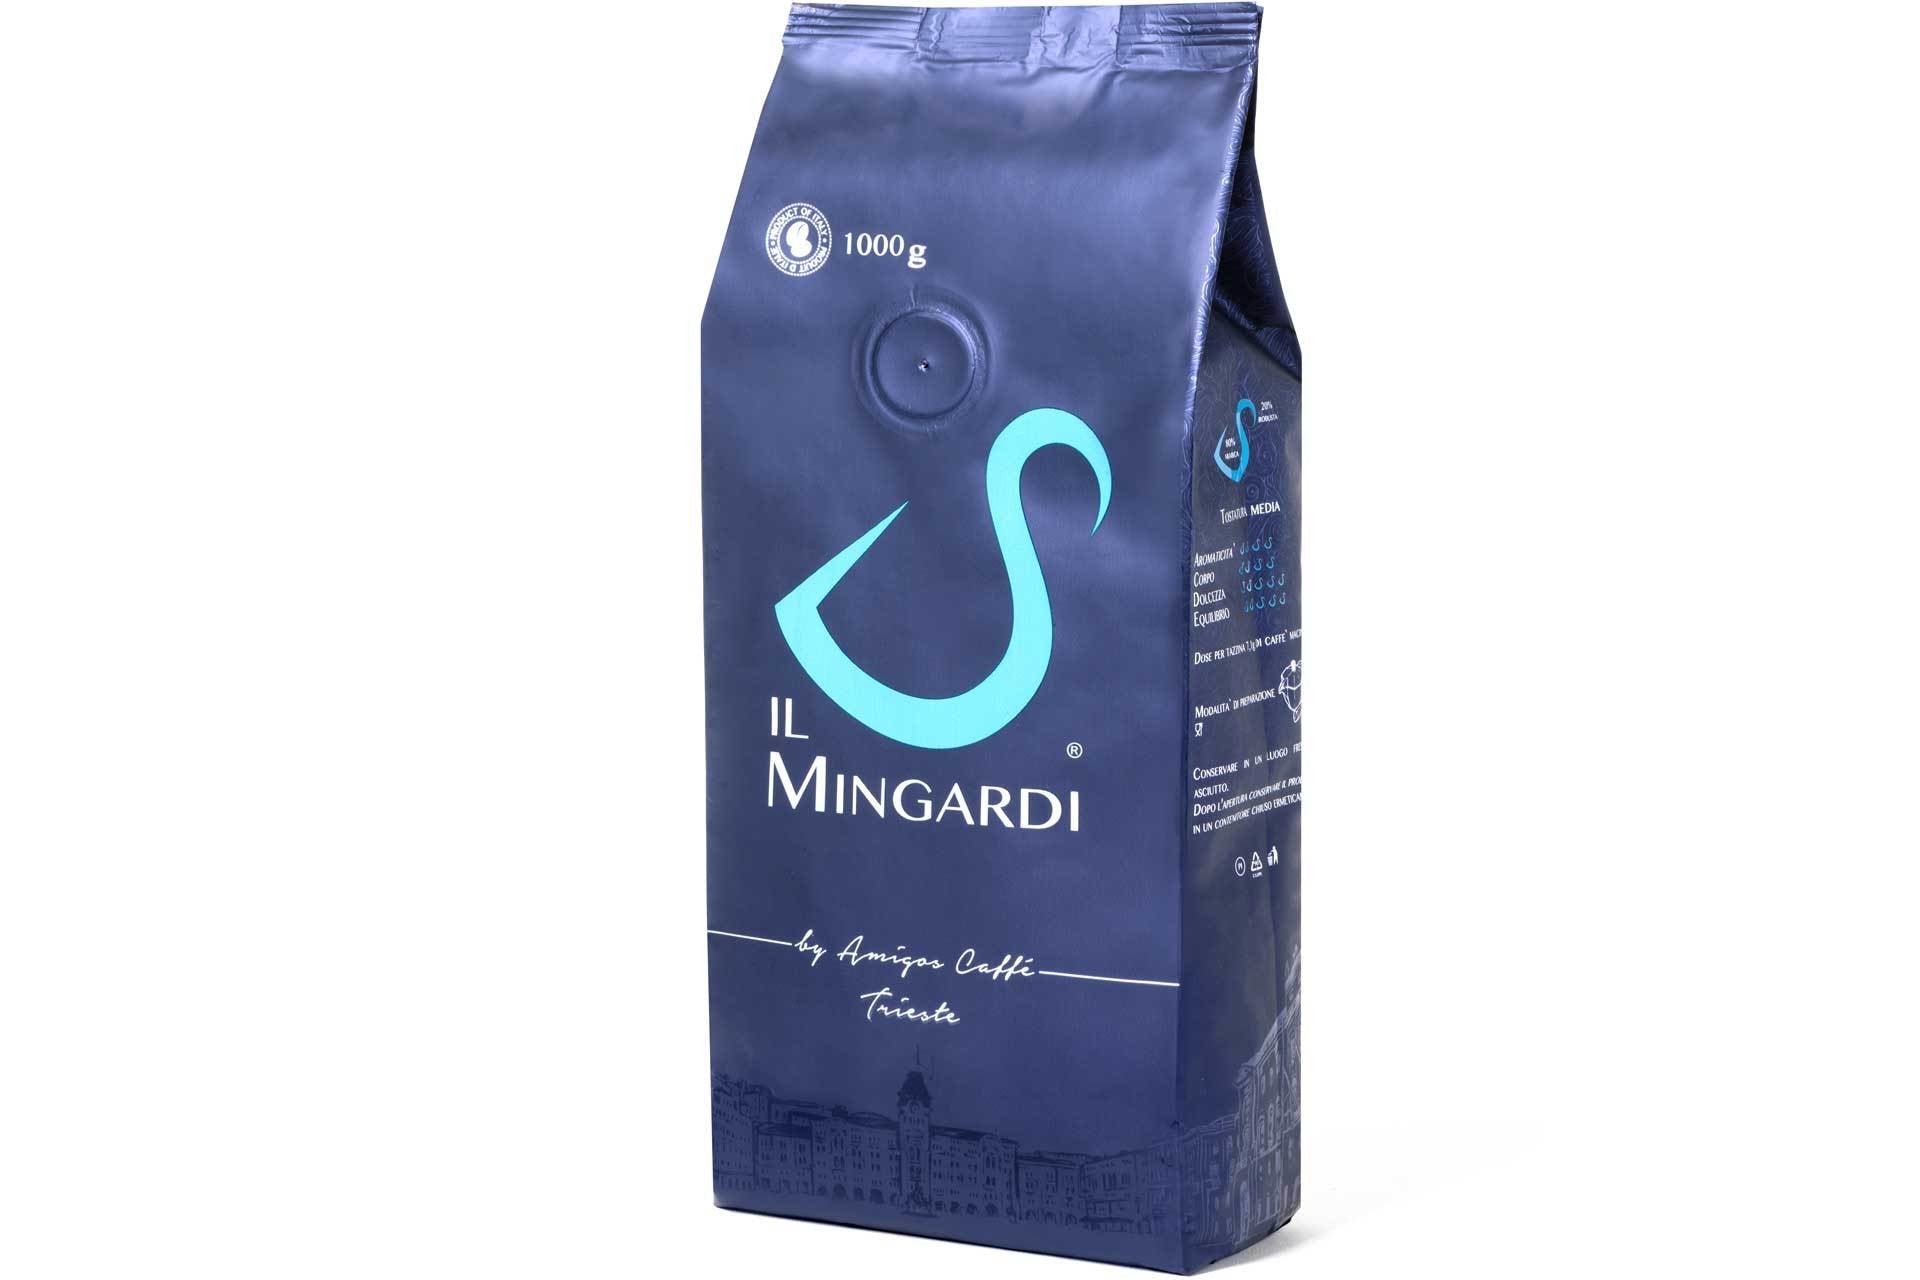 Il Migardi S coffee beans